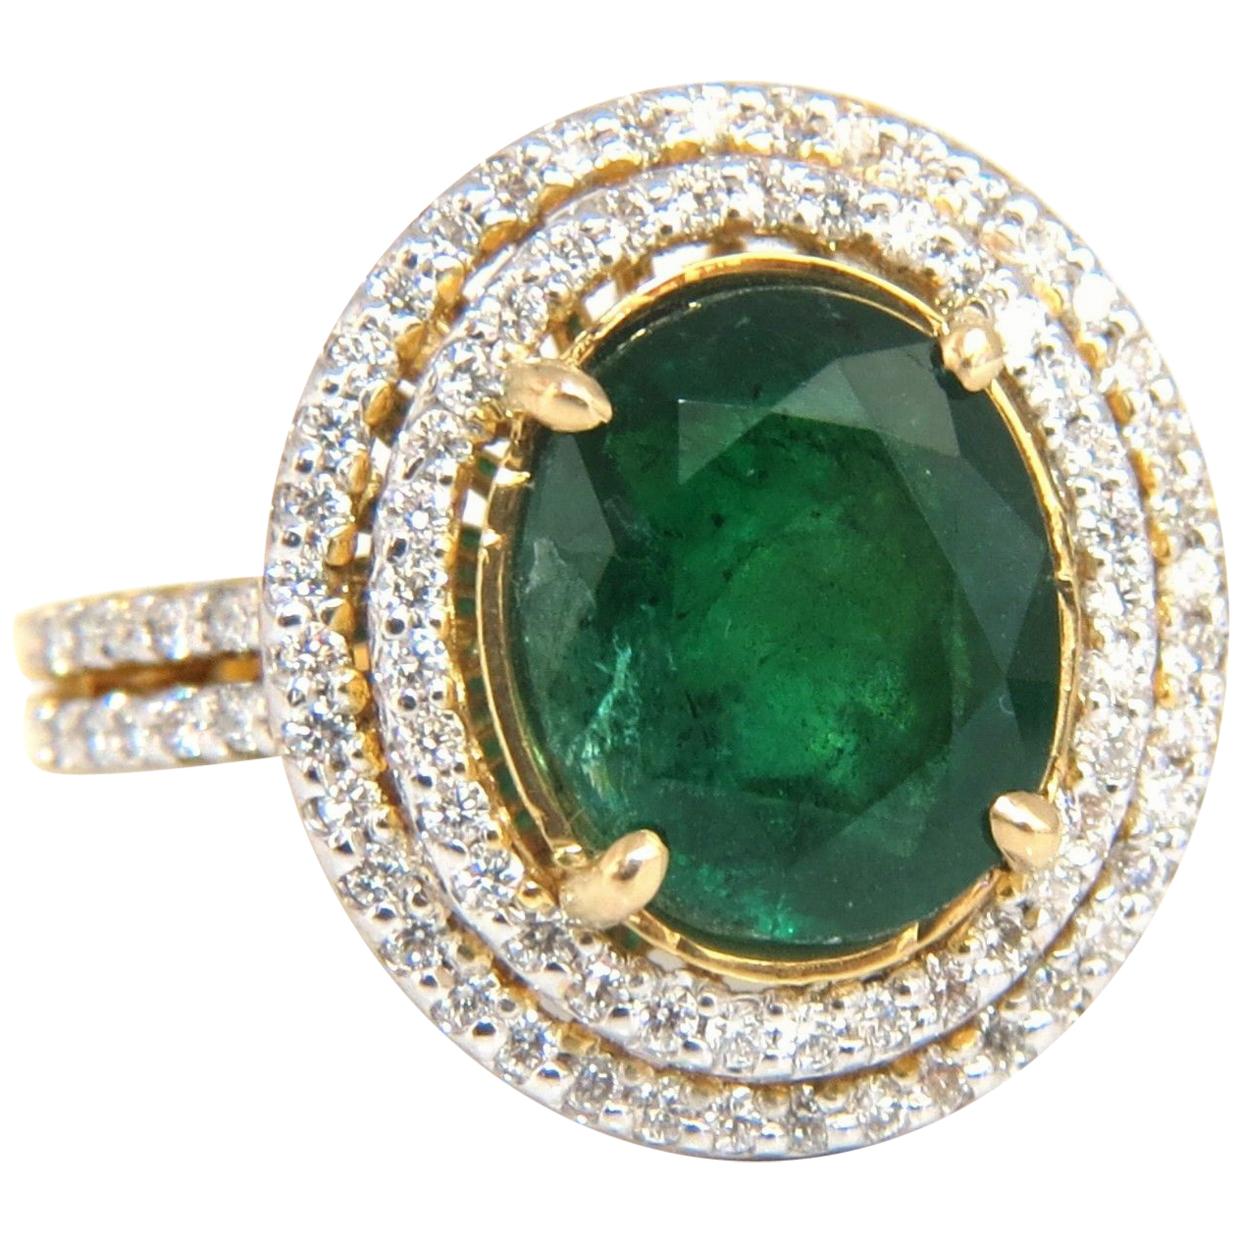 4.45 Carat Natural Oval Emerald Diamond Ring 14 Karat Double Halo Deco